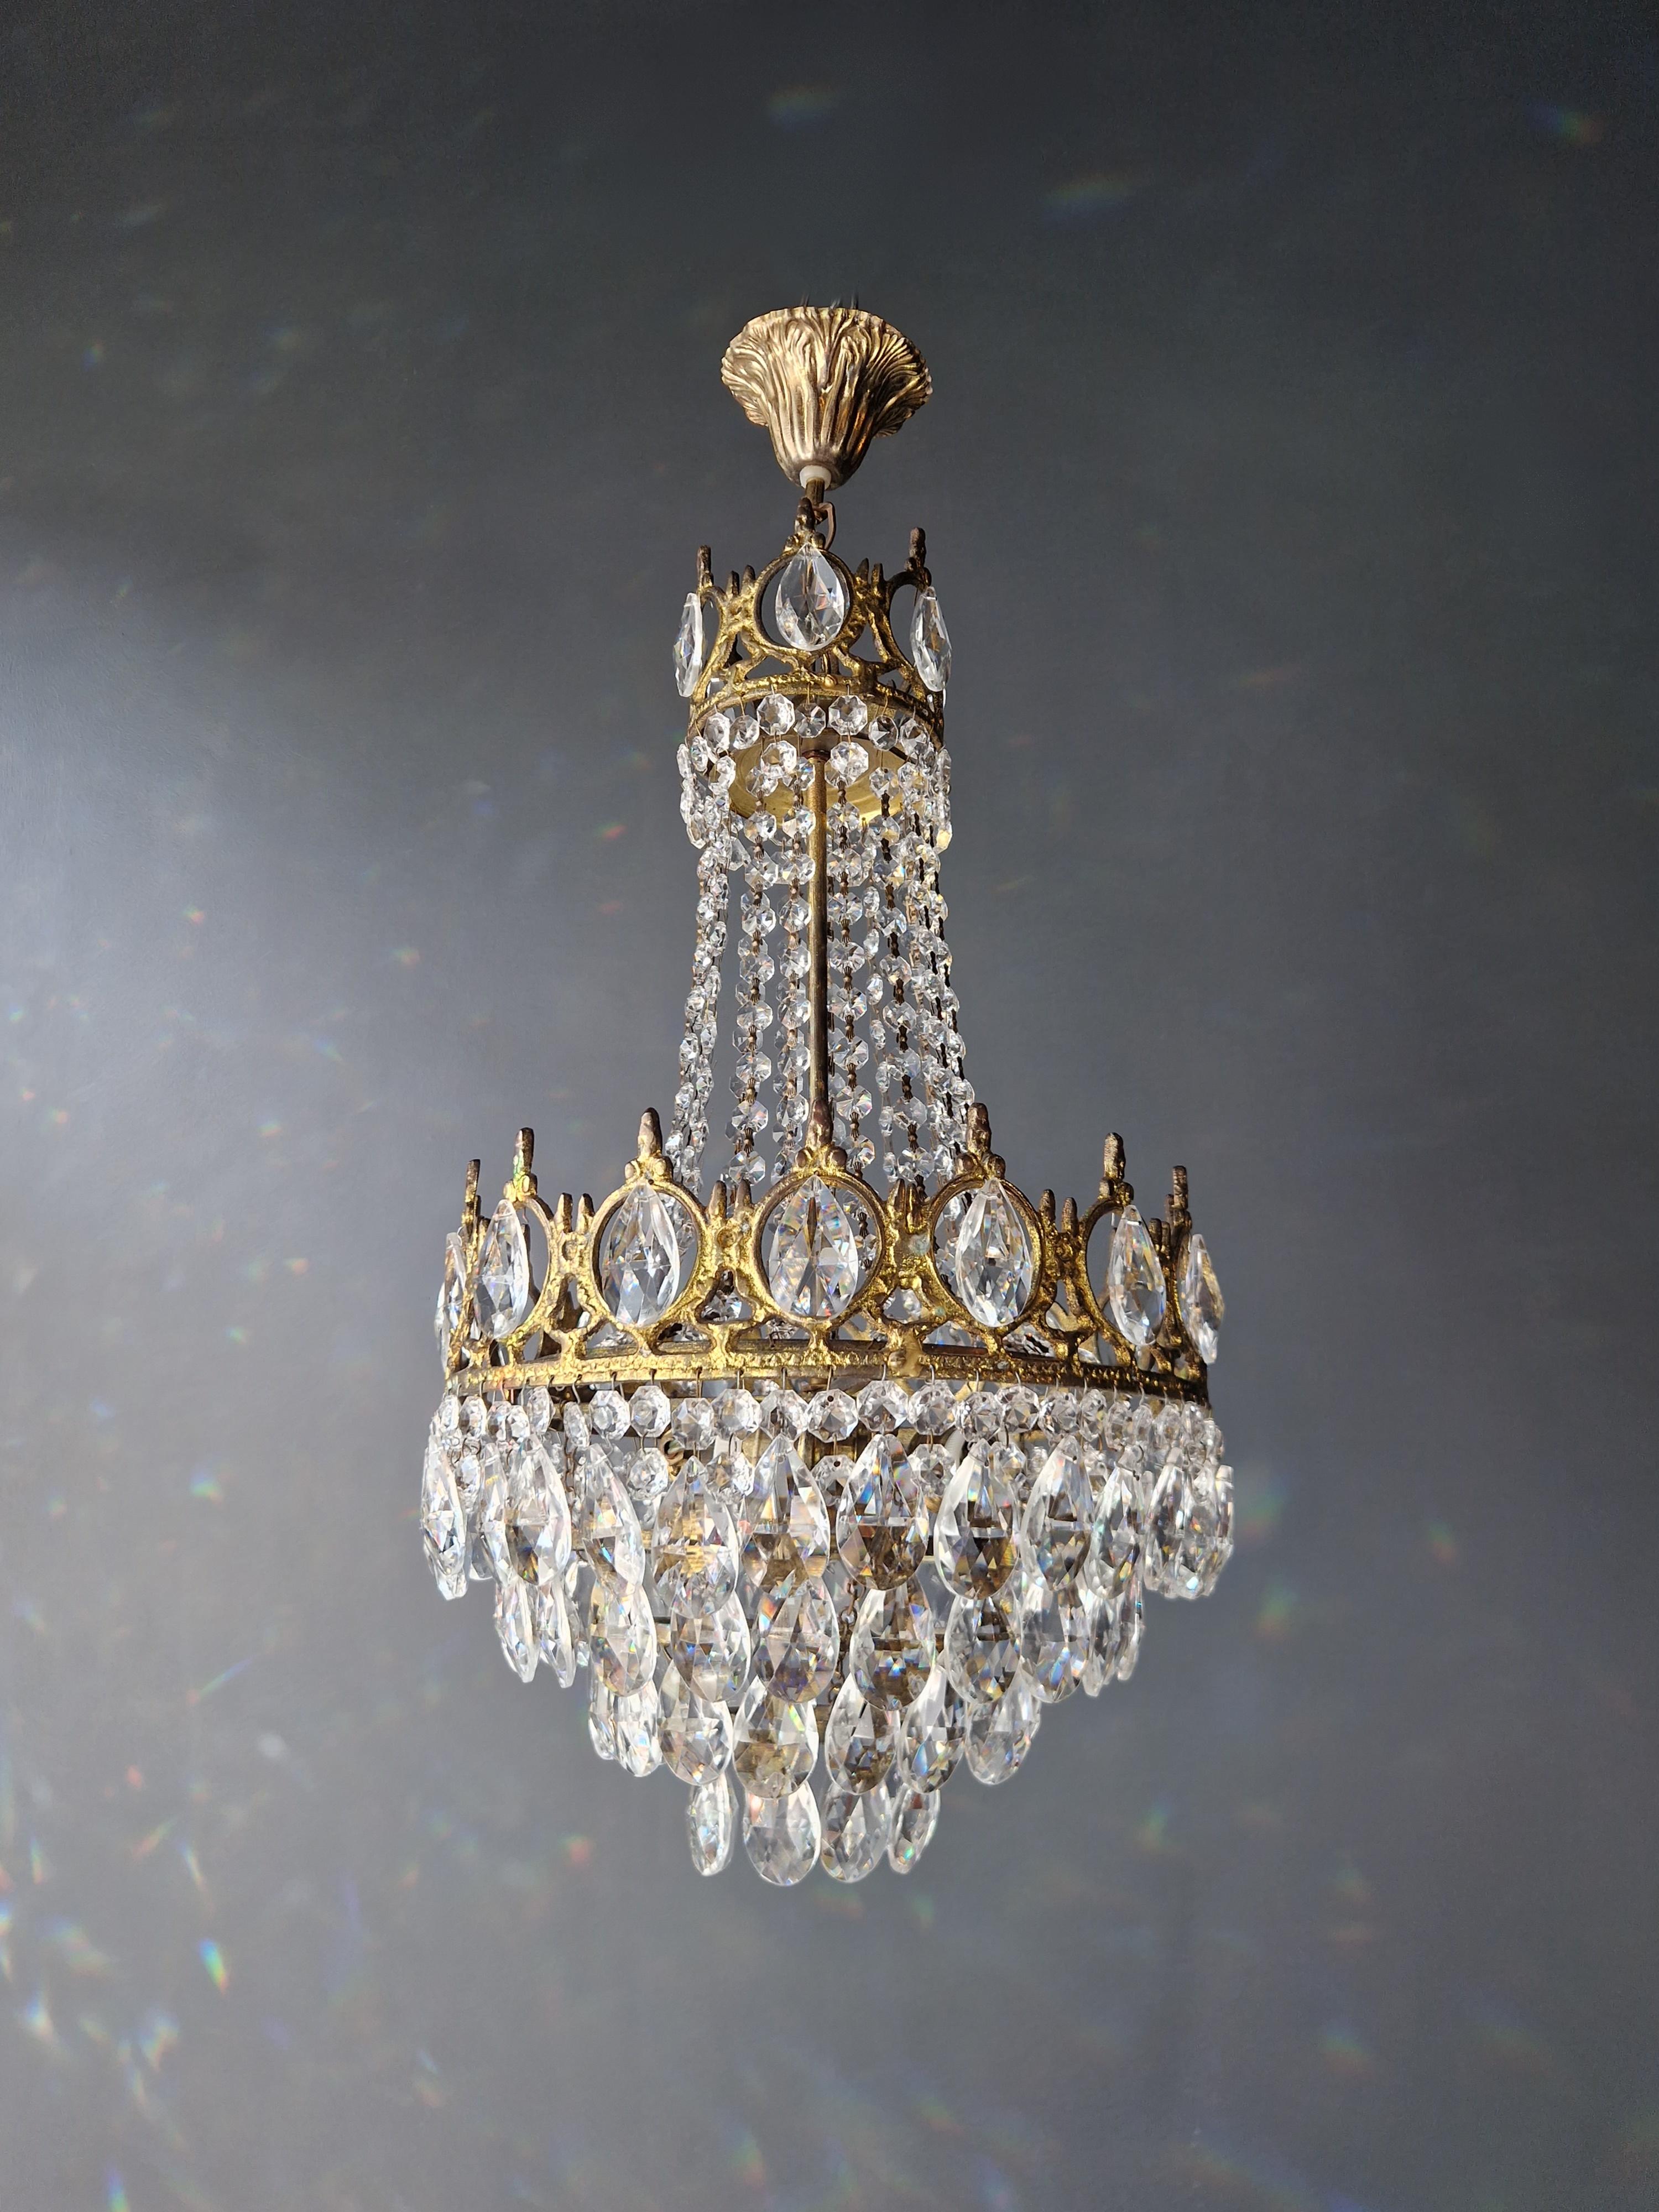 Basket Chandelier Brass Empire Crystal Lustre Ceiling Antique Art Nouveau Gold For Sale 4